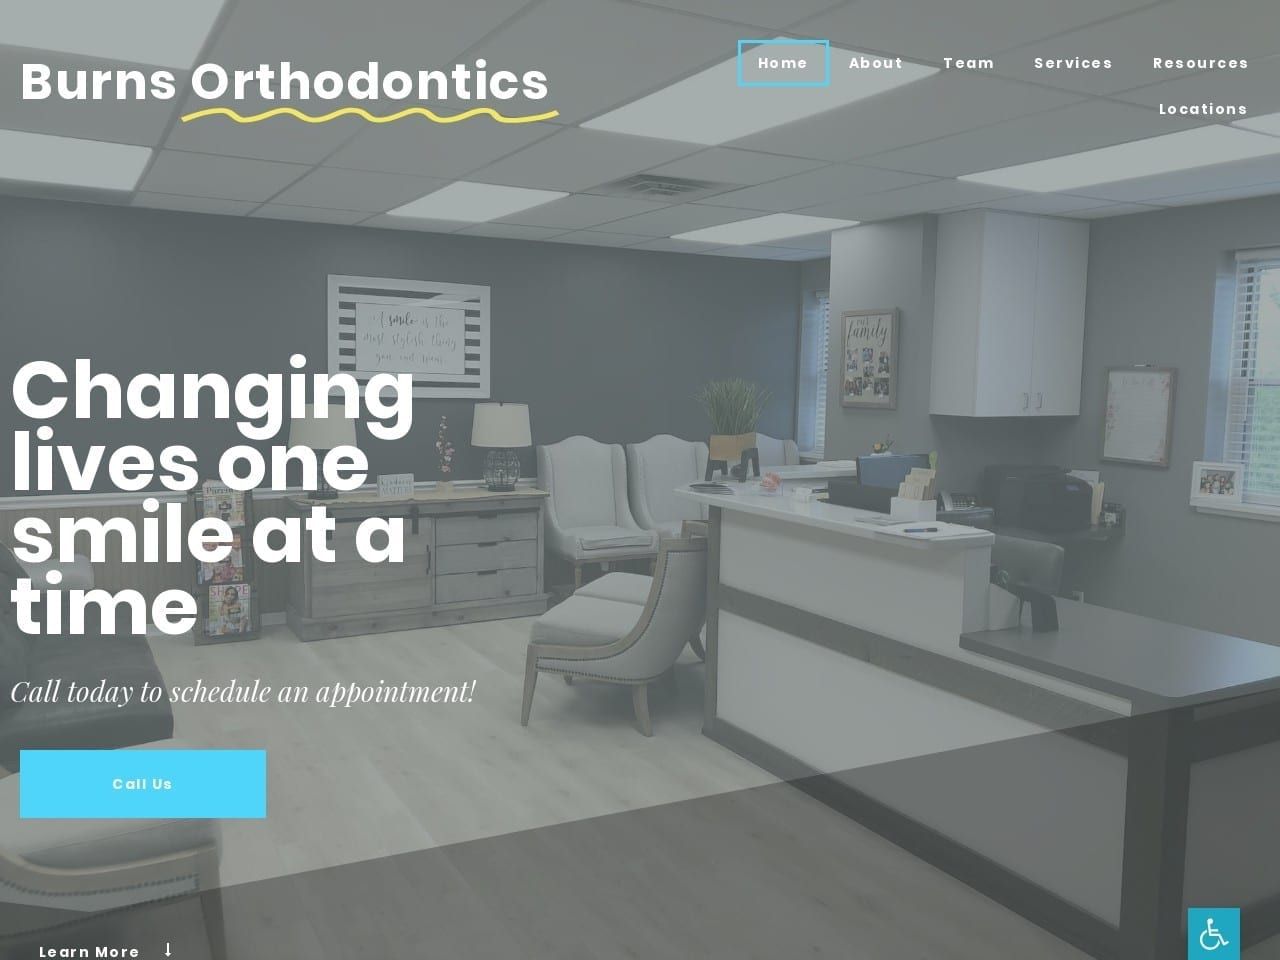 Burns Orthodontics Website Screenshot From Url Burnsorthodontics.com